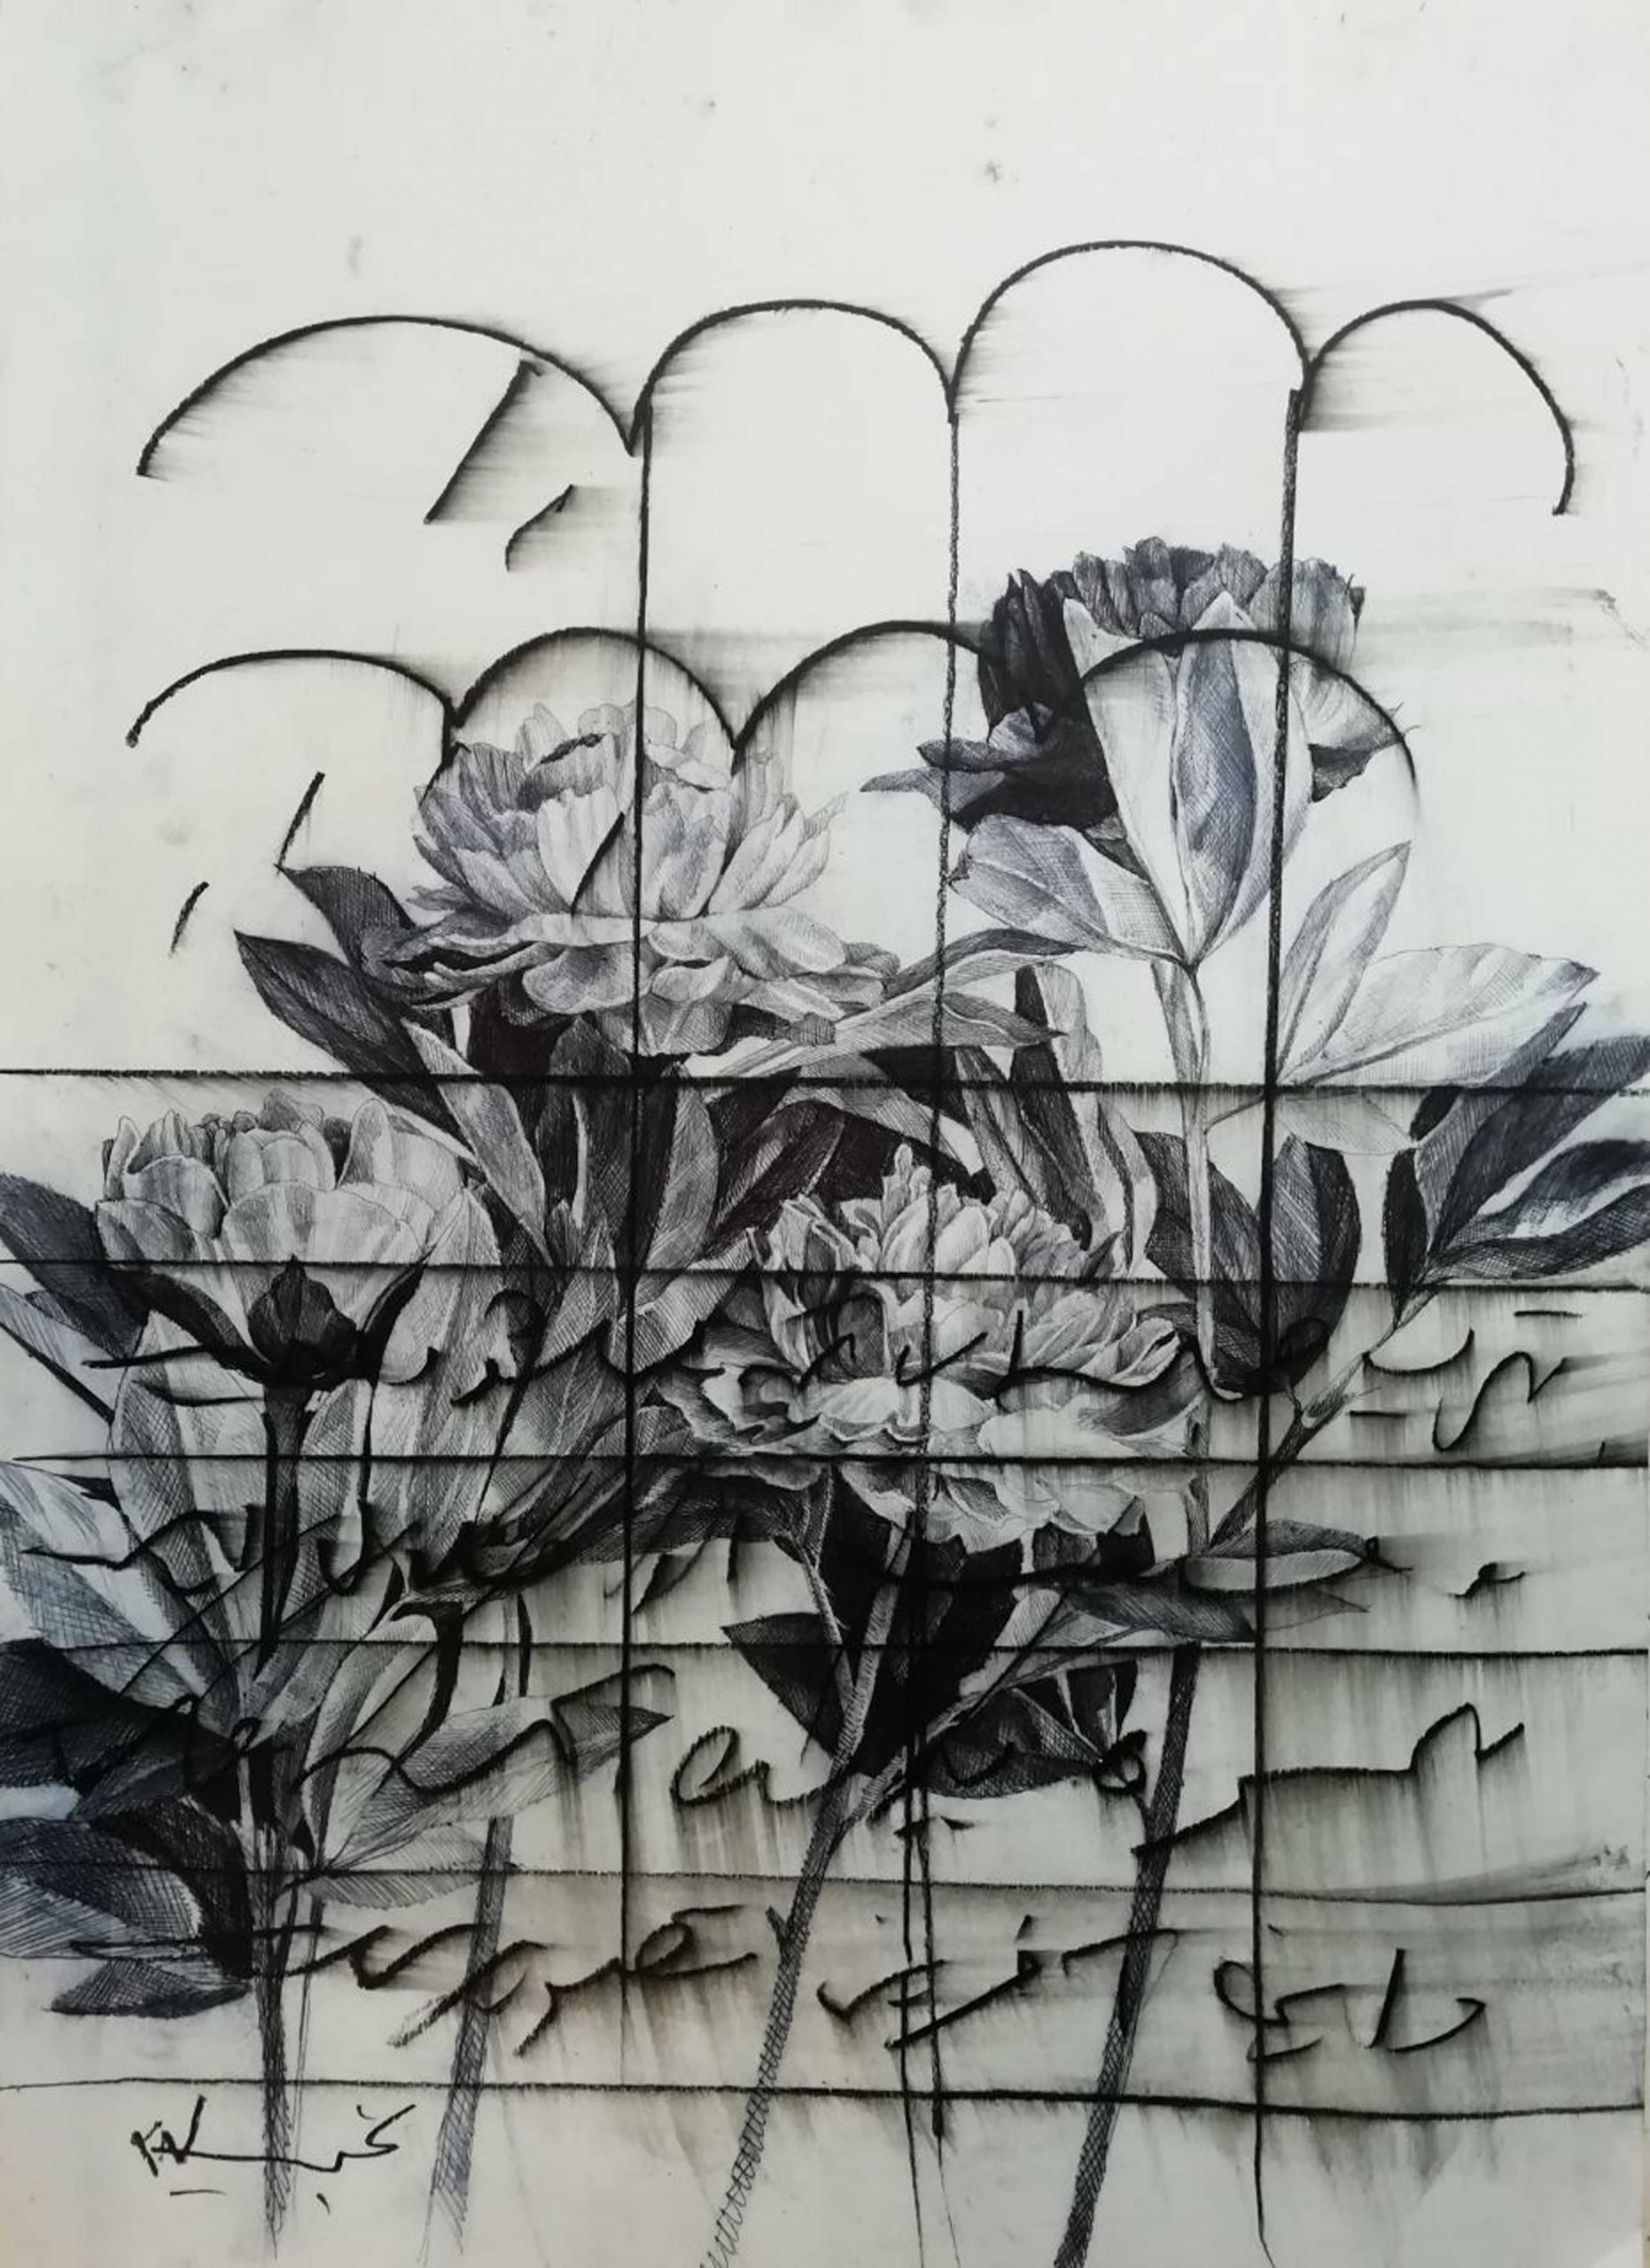 01 Hossein Tamjid 50.70 Cm Pen and Pencil on Cardboard 2019 scaled - Group Exhibition | Ten Days Like Flower | Hossein Tamjid - Group Exhibition | Ten Days Like Flower | Hossein Tamjid